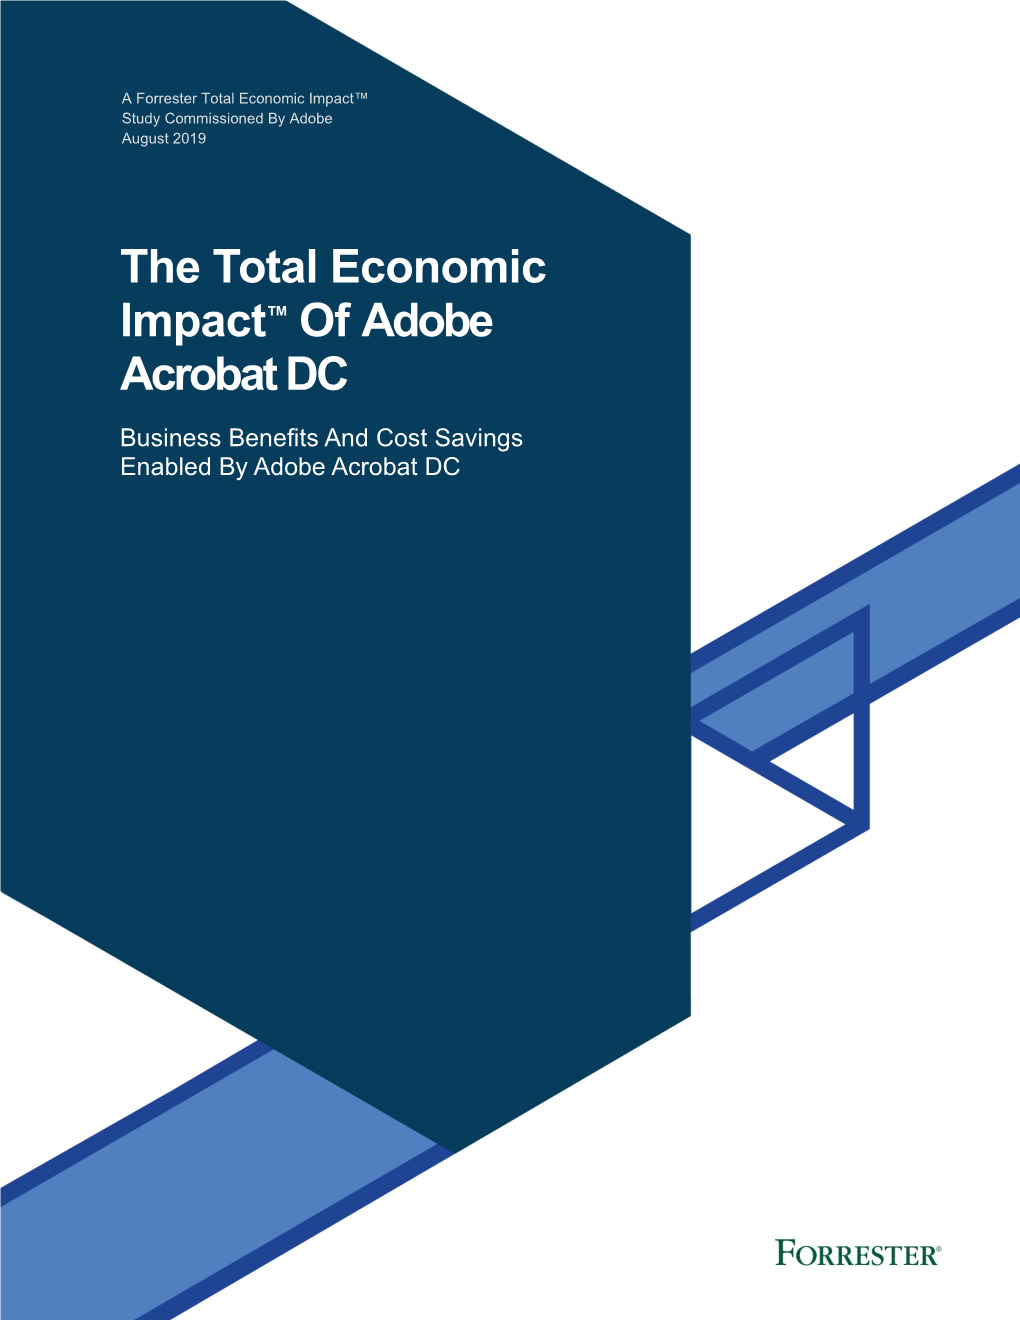 The Total Economic Impact™ of Adobe Acrobat DC